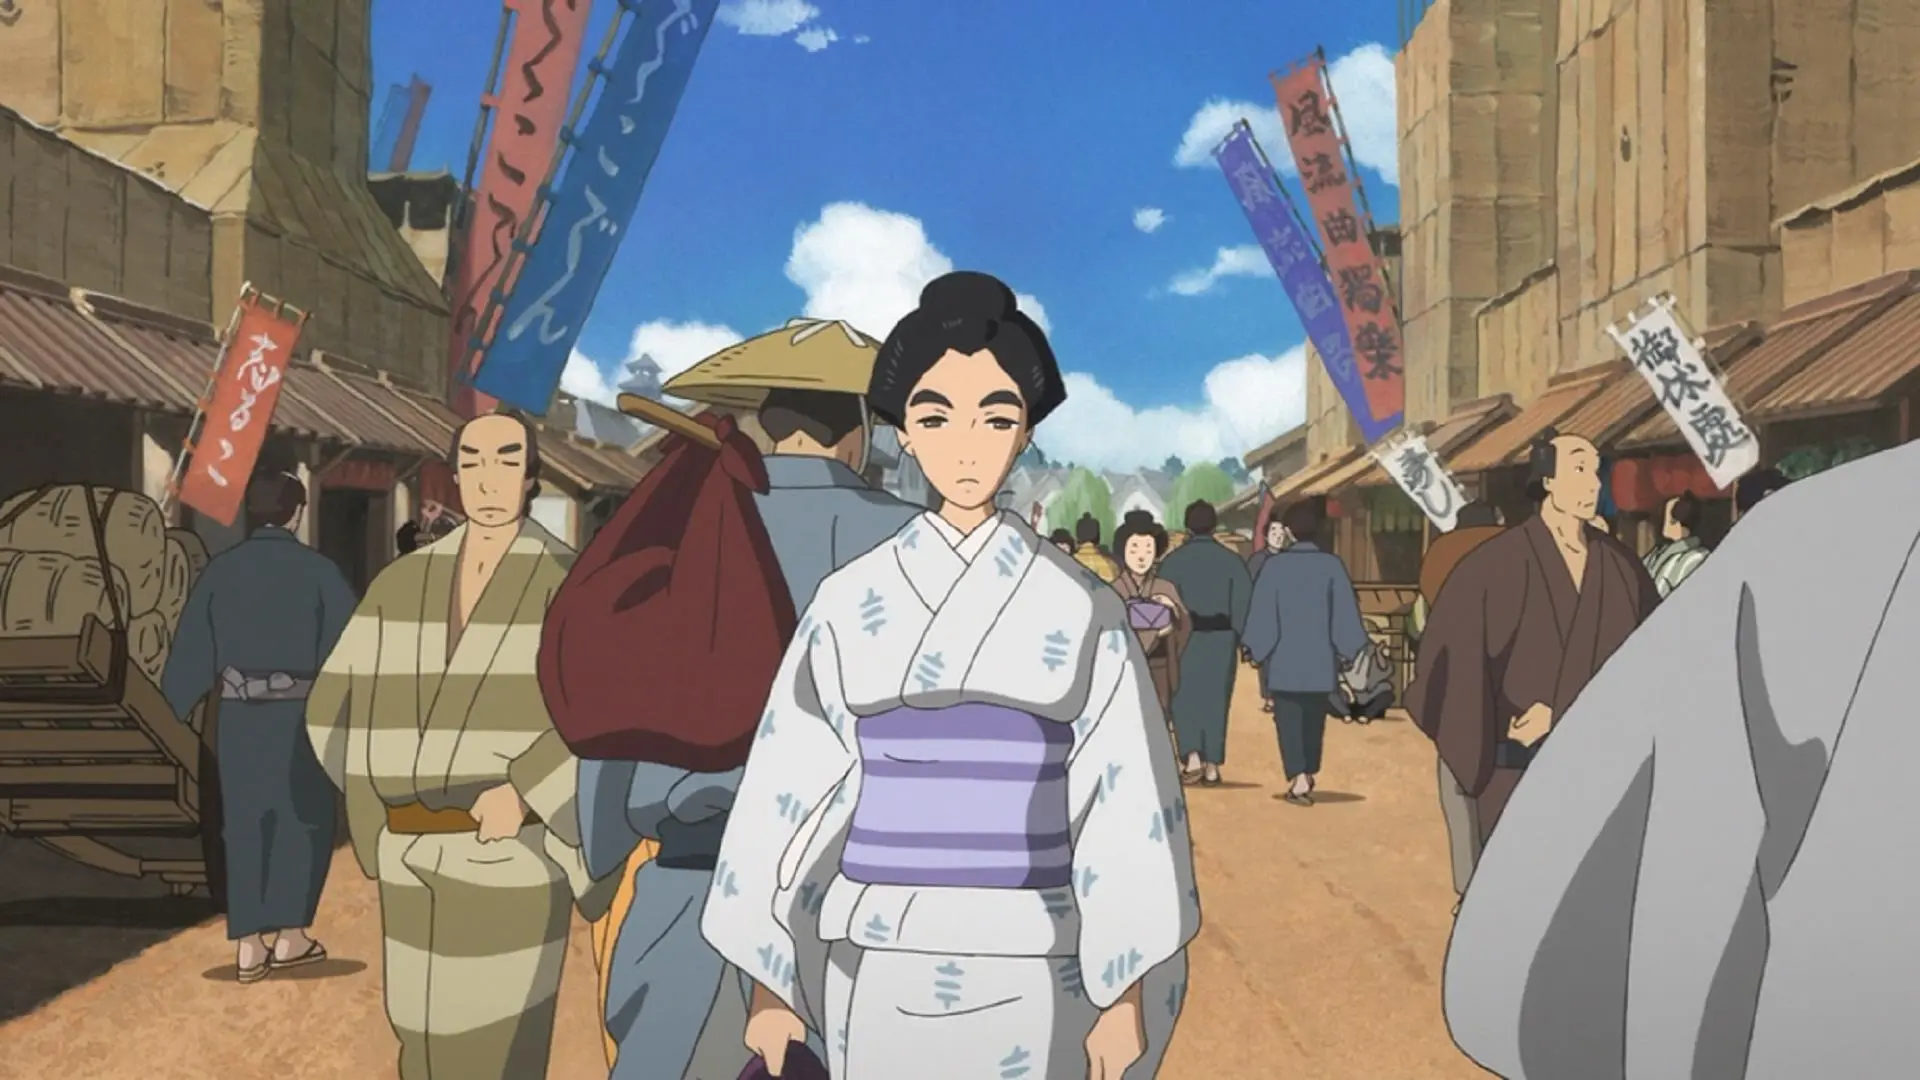 anime movies on netflix: Miss Hokusai